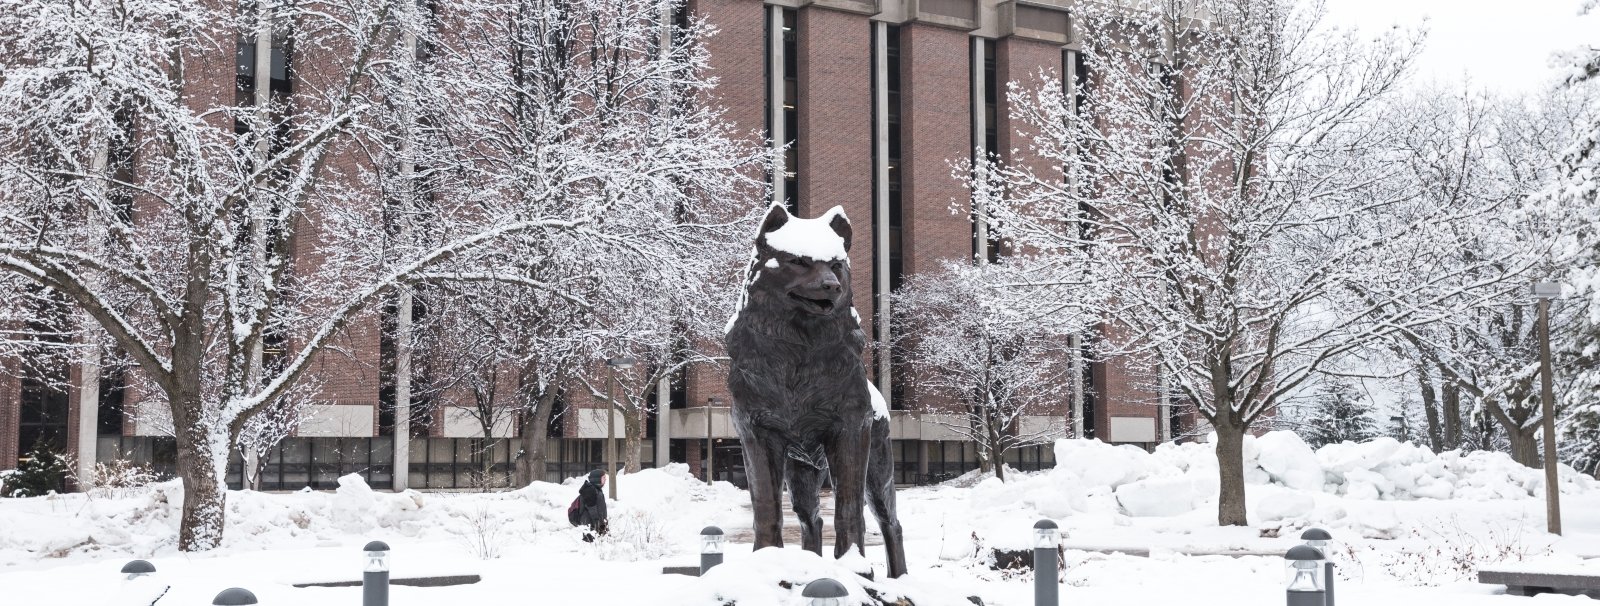 husky statue in snow